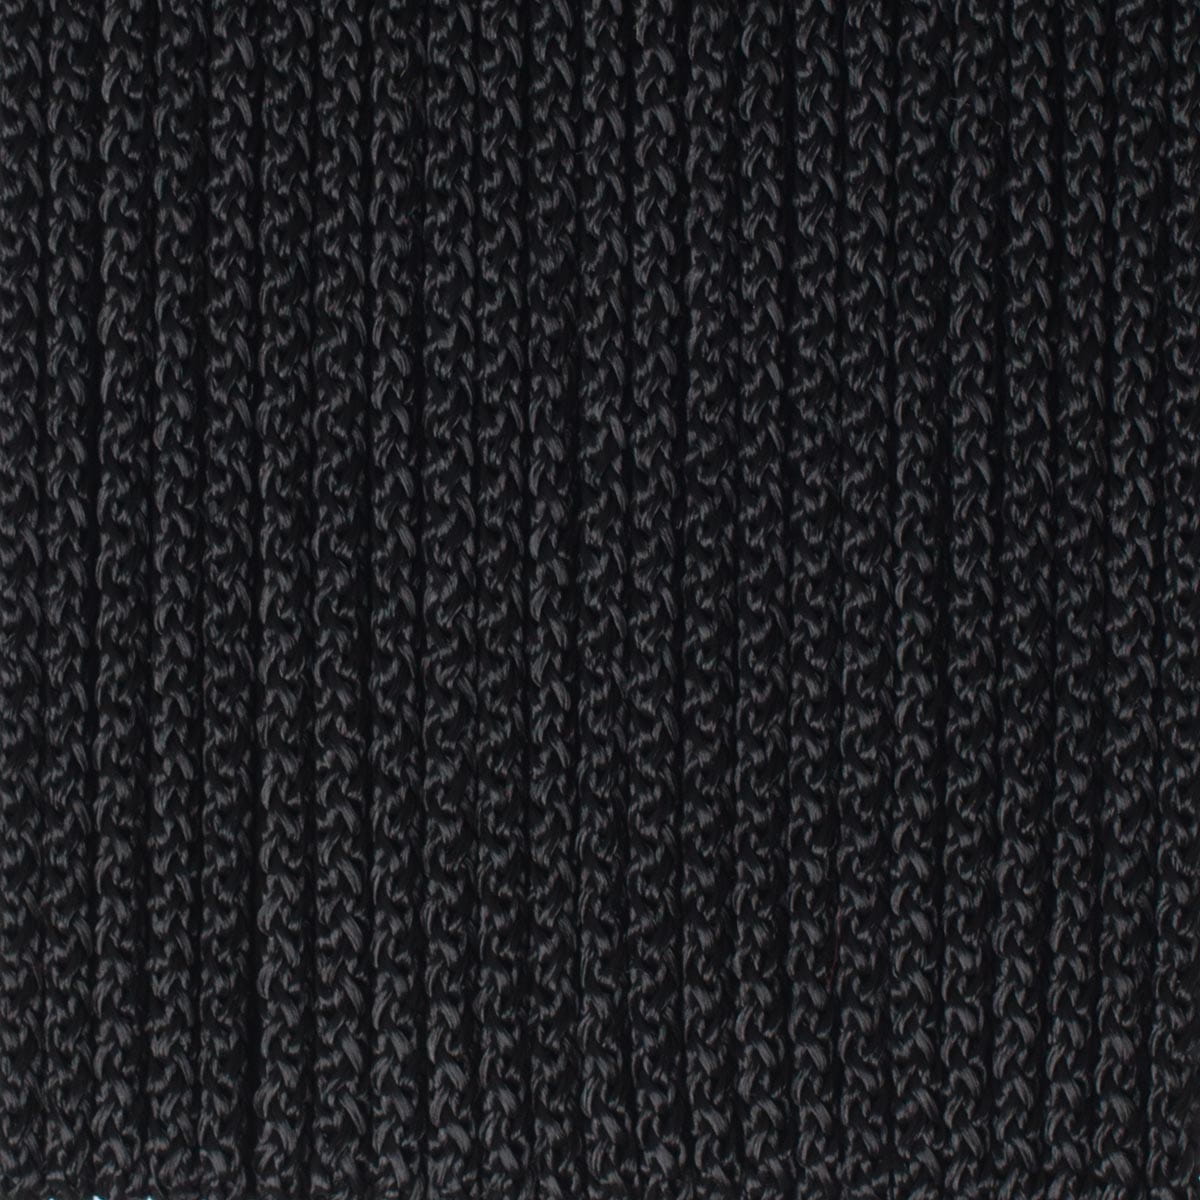 Black polypropylene cord 7mm